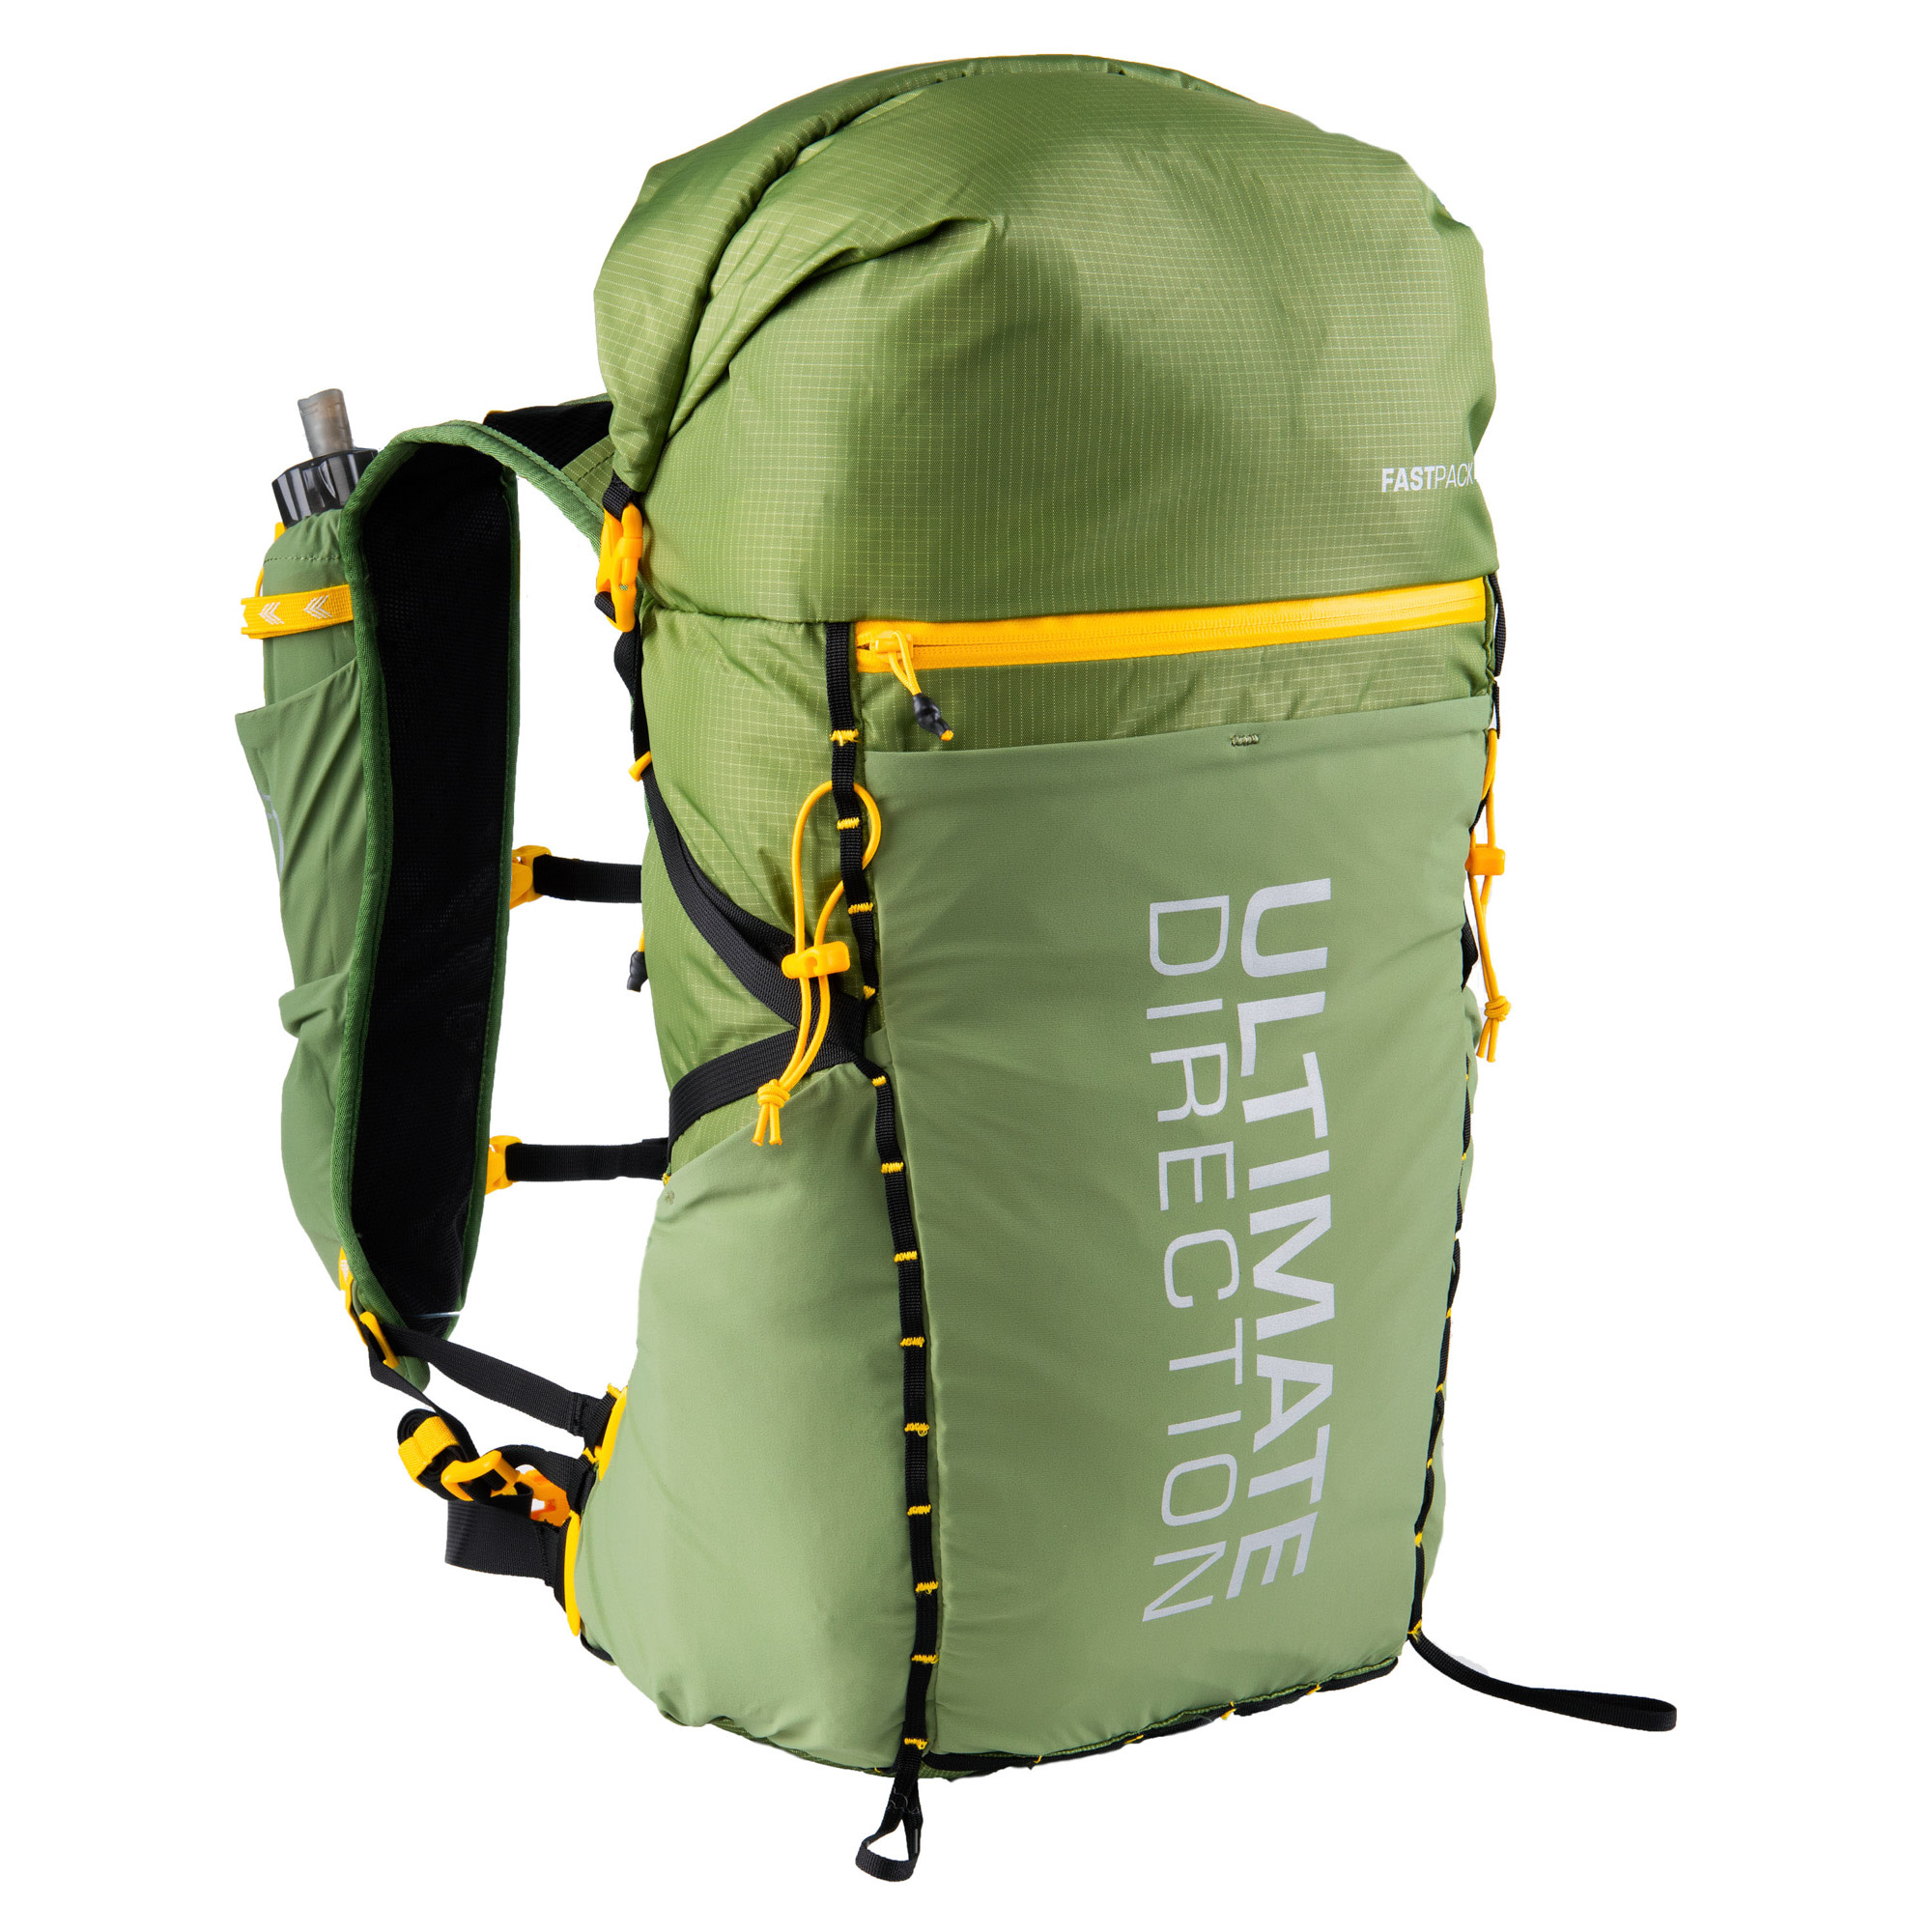 Ultimate Direction Fastpack 40 Waistbelt Size Medium/Large